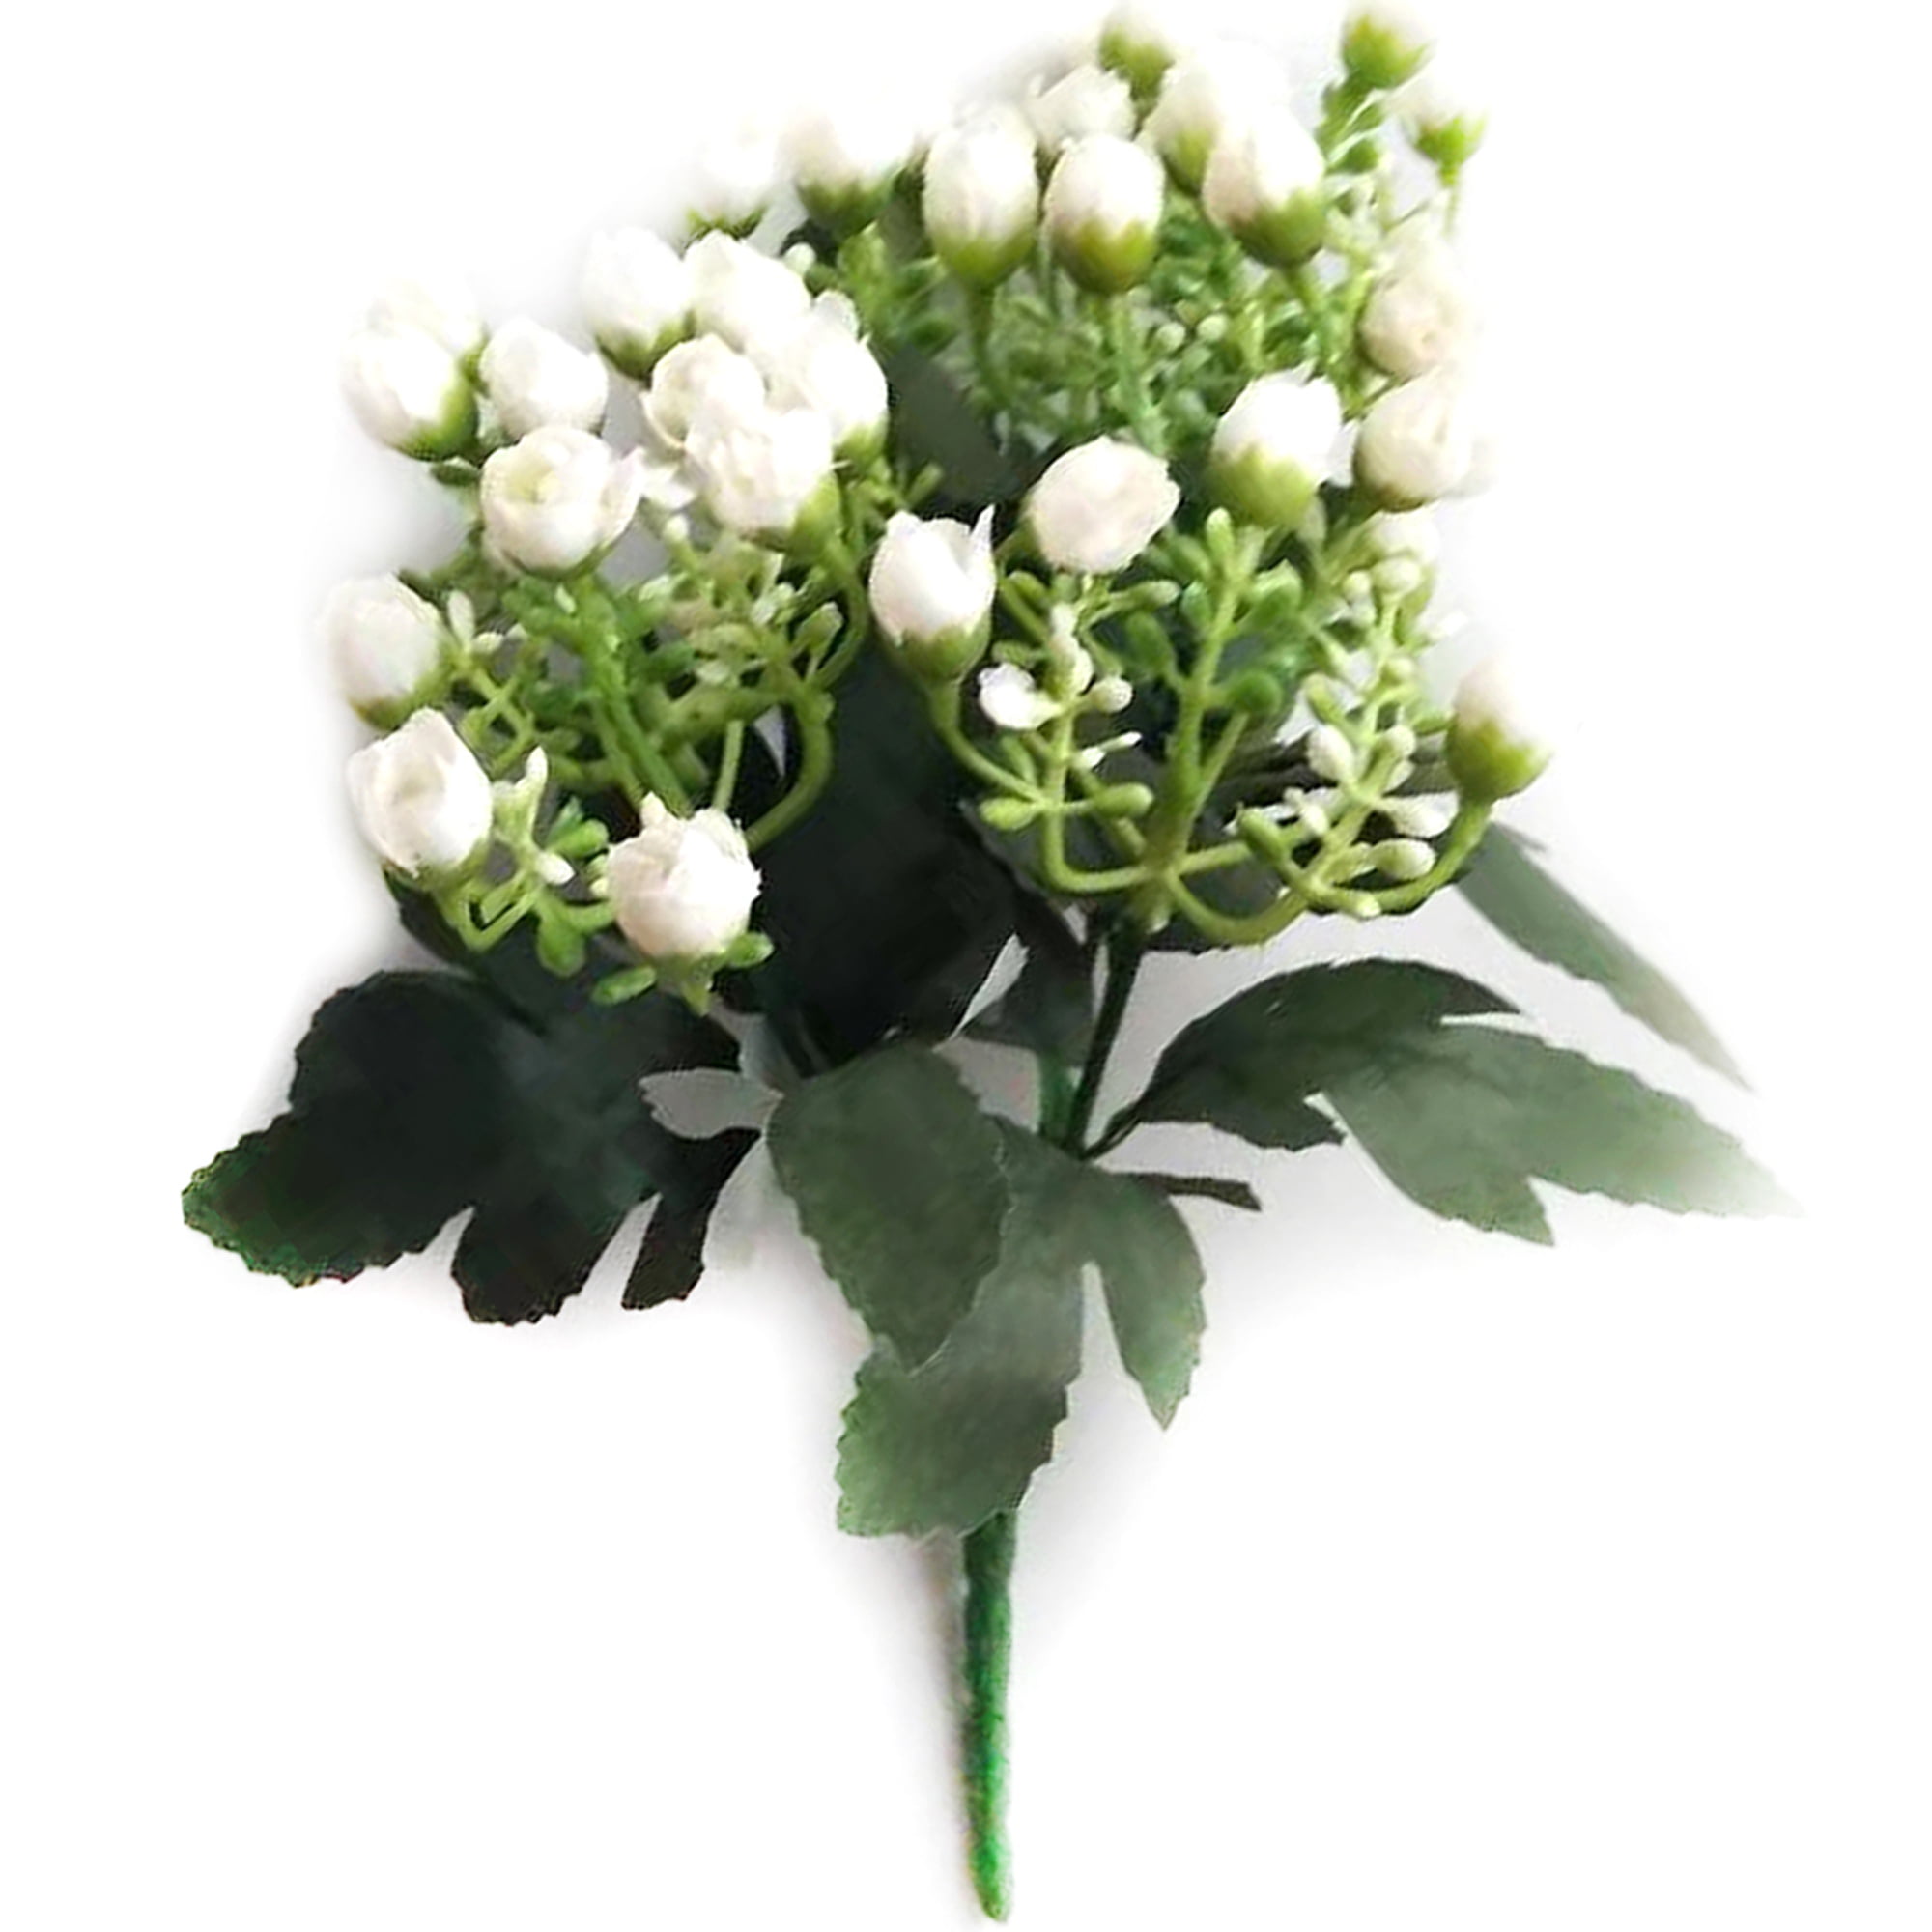 Details about   36HEADS ARTIFICIAL SILK FLOWERS BUNCH Wedding Grave Bouquet X-mas Gift New 